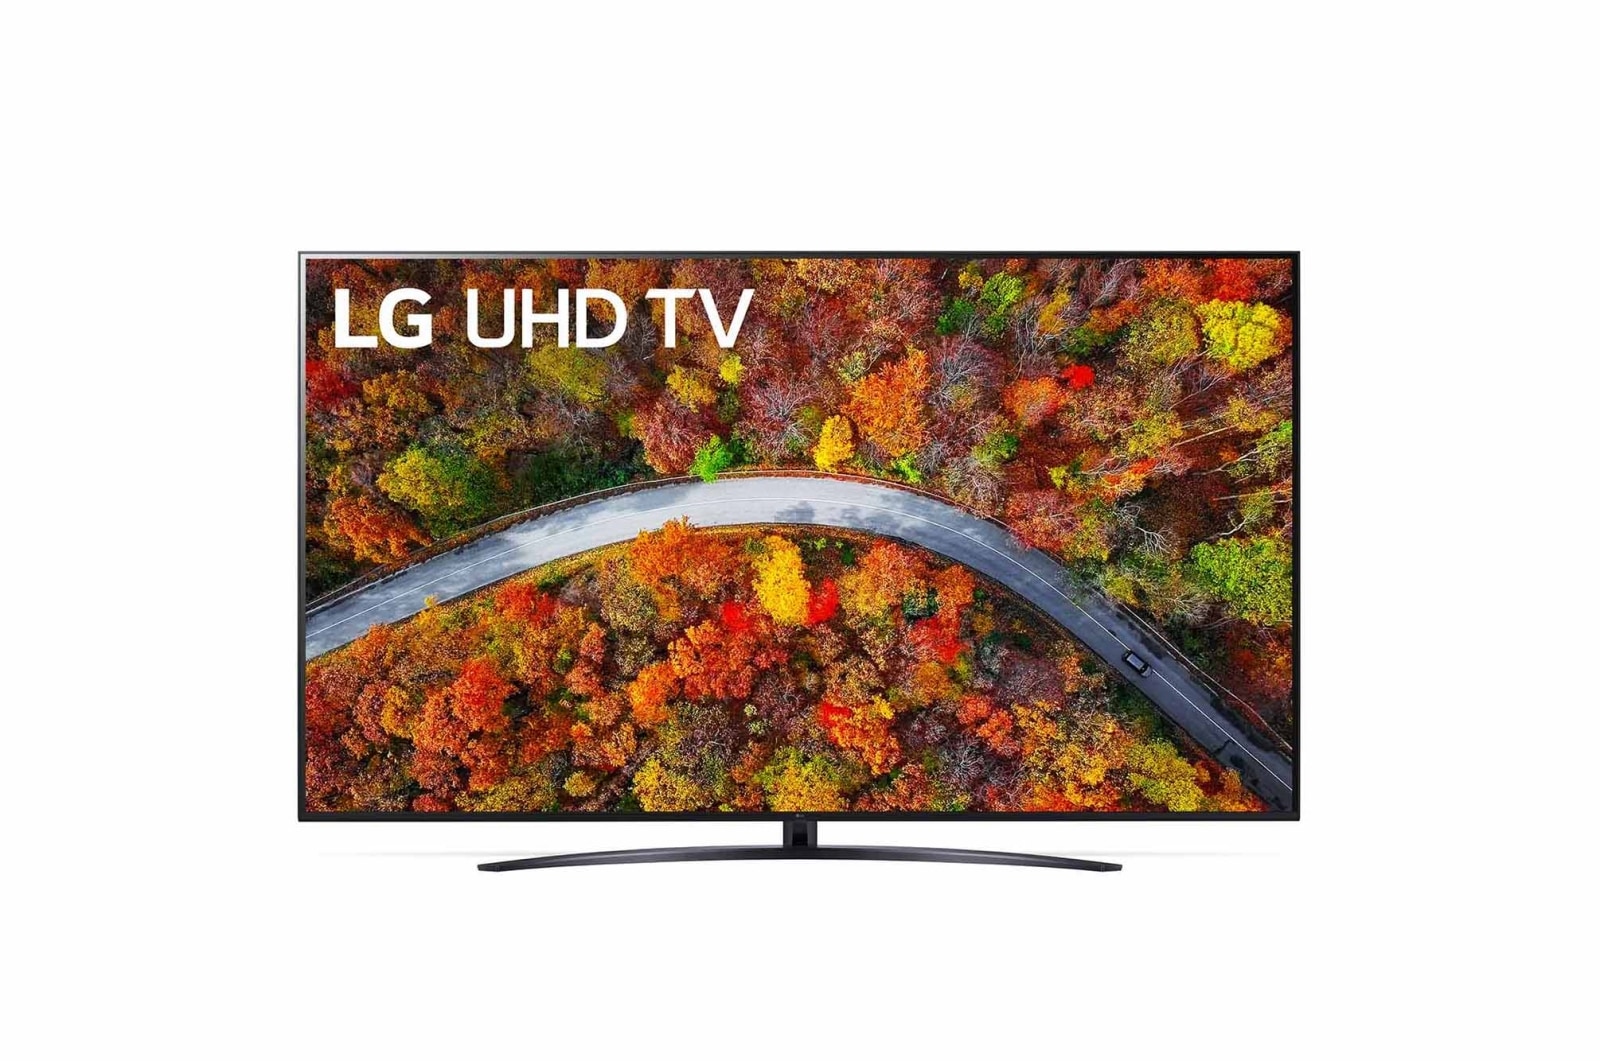 LG Smart TV LG UP75, 75 pouces 4K UHD